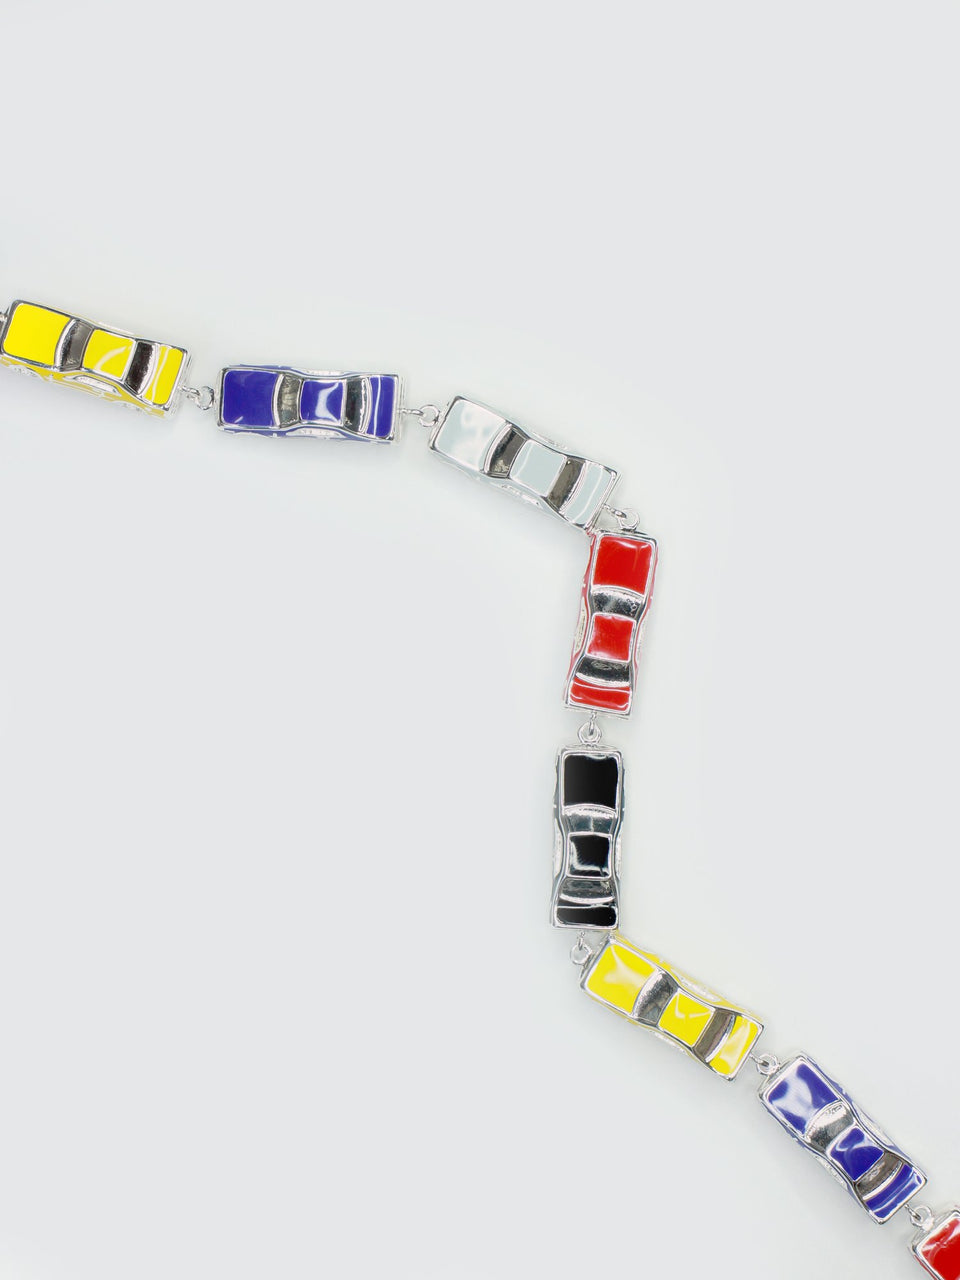 Traffic Jam Necklace by Marland Backus - traffic_jam_closeup_1